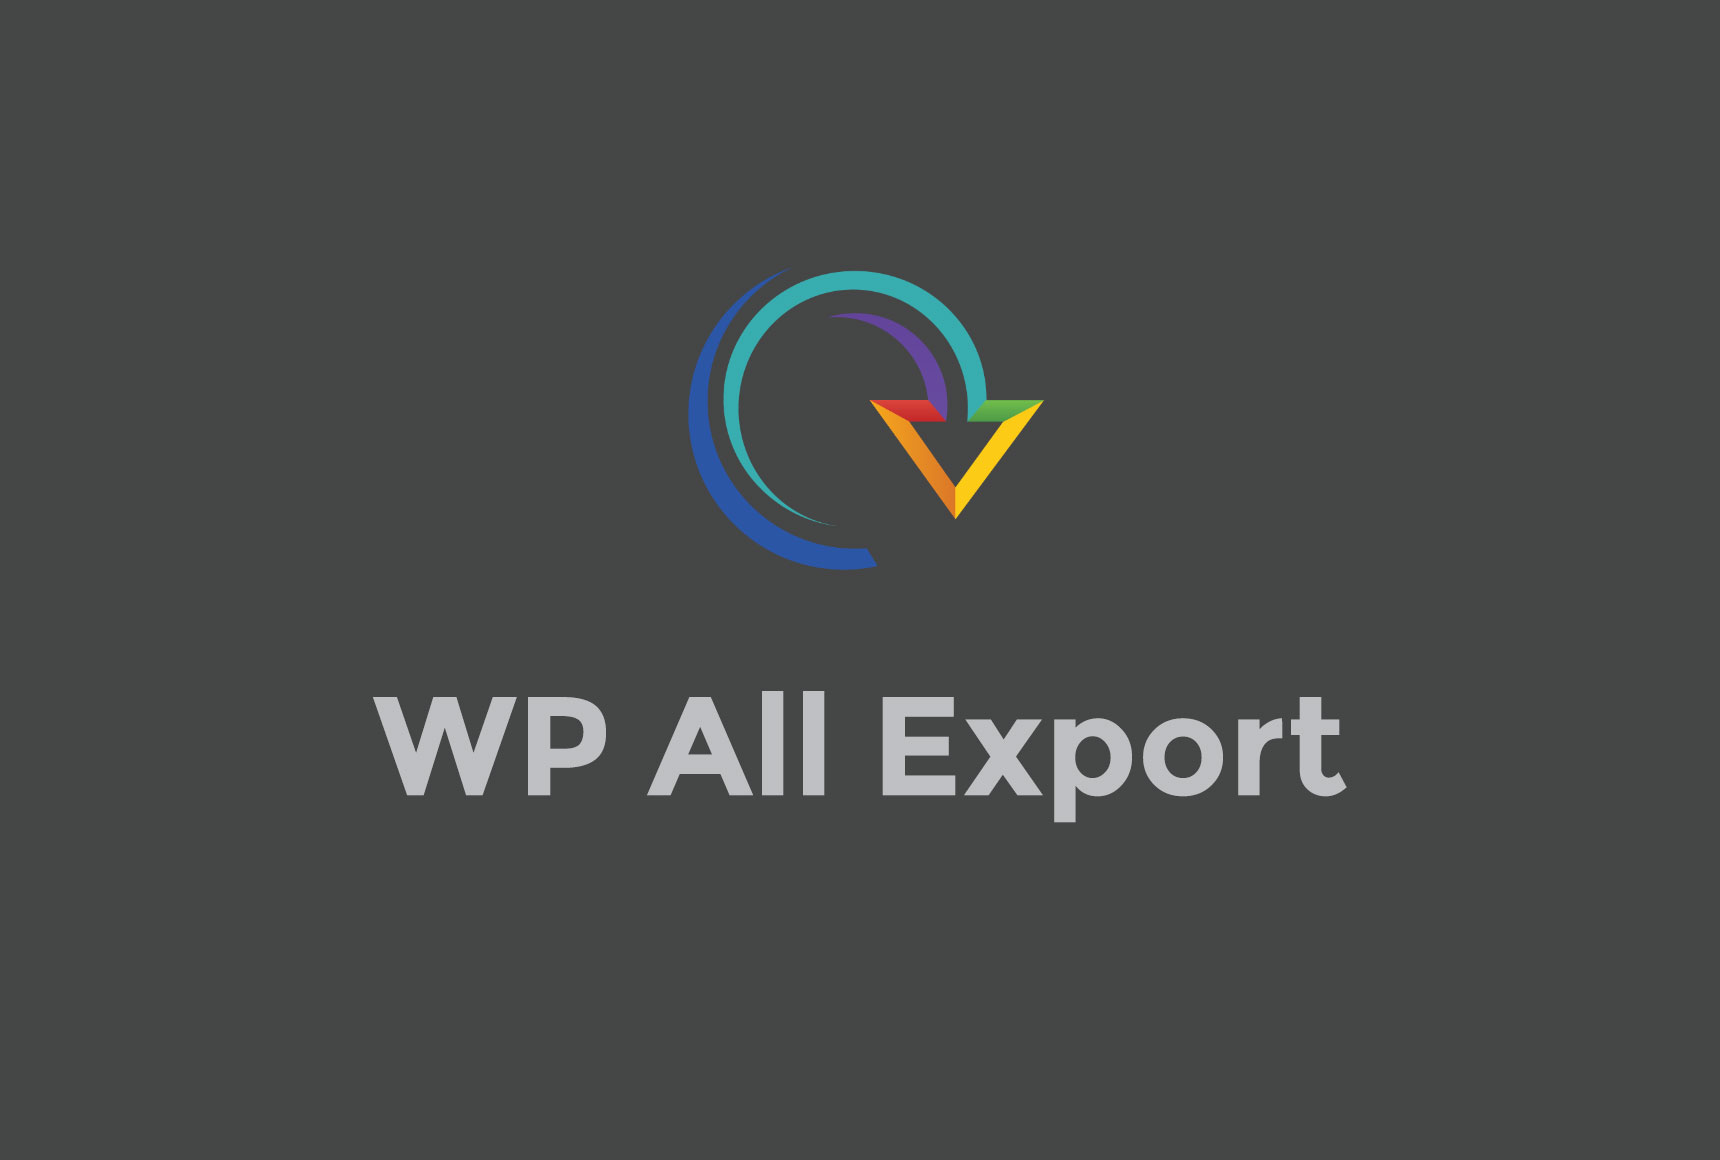 WP All Export masthead image